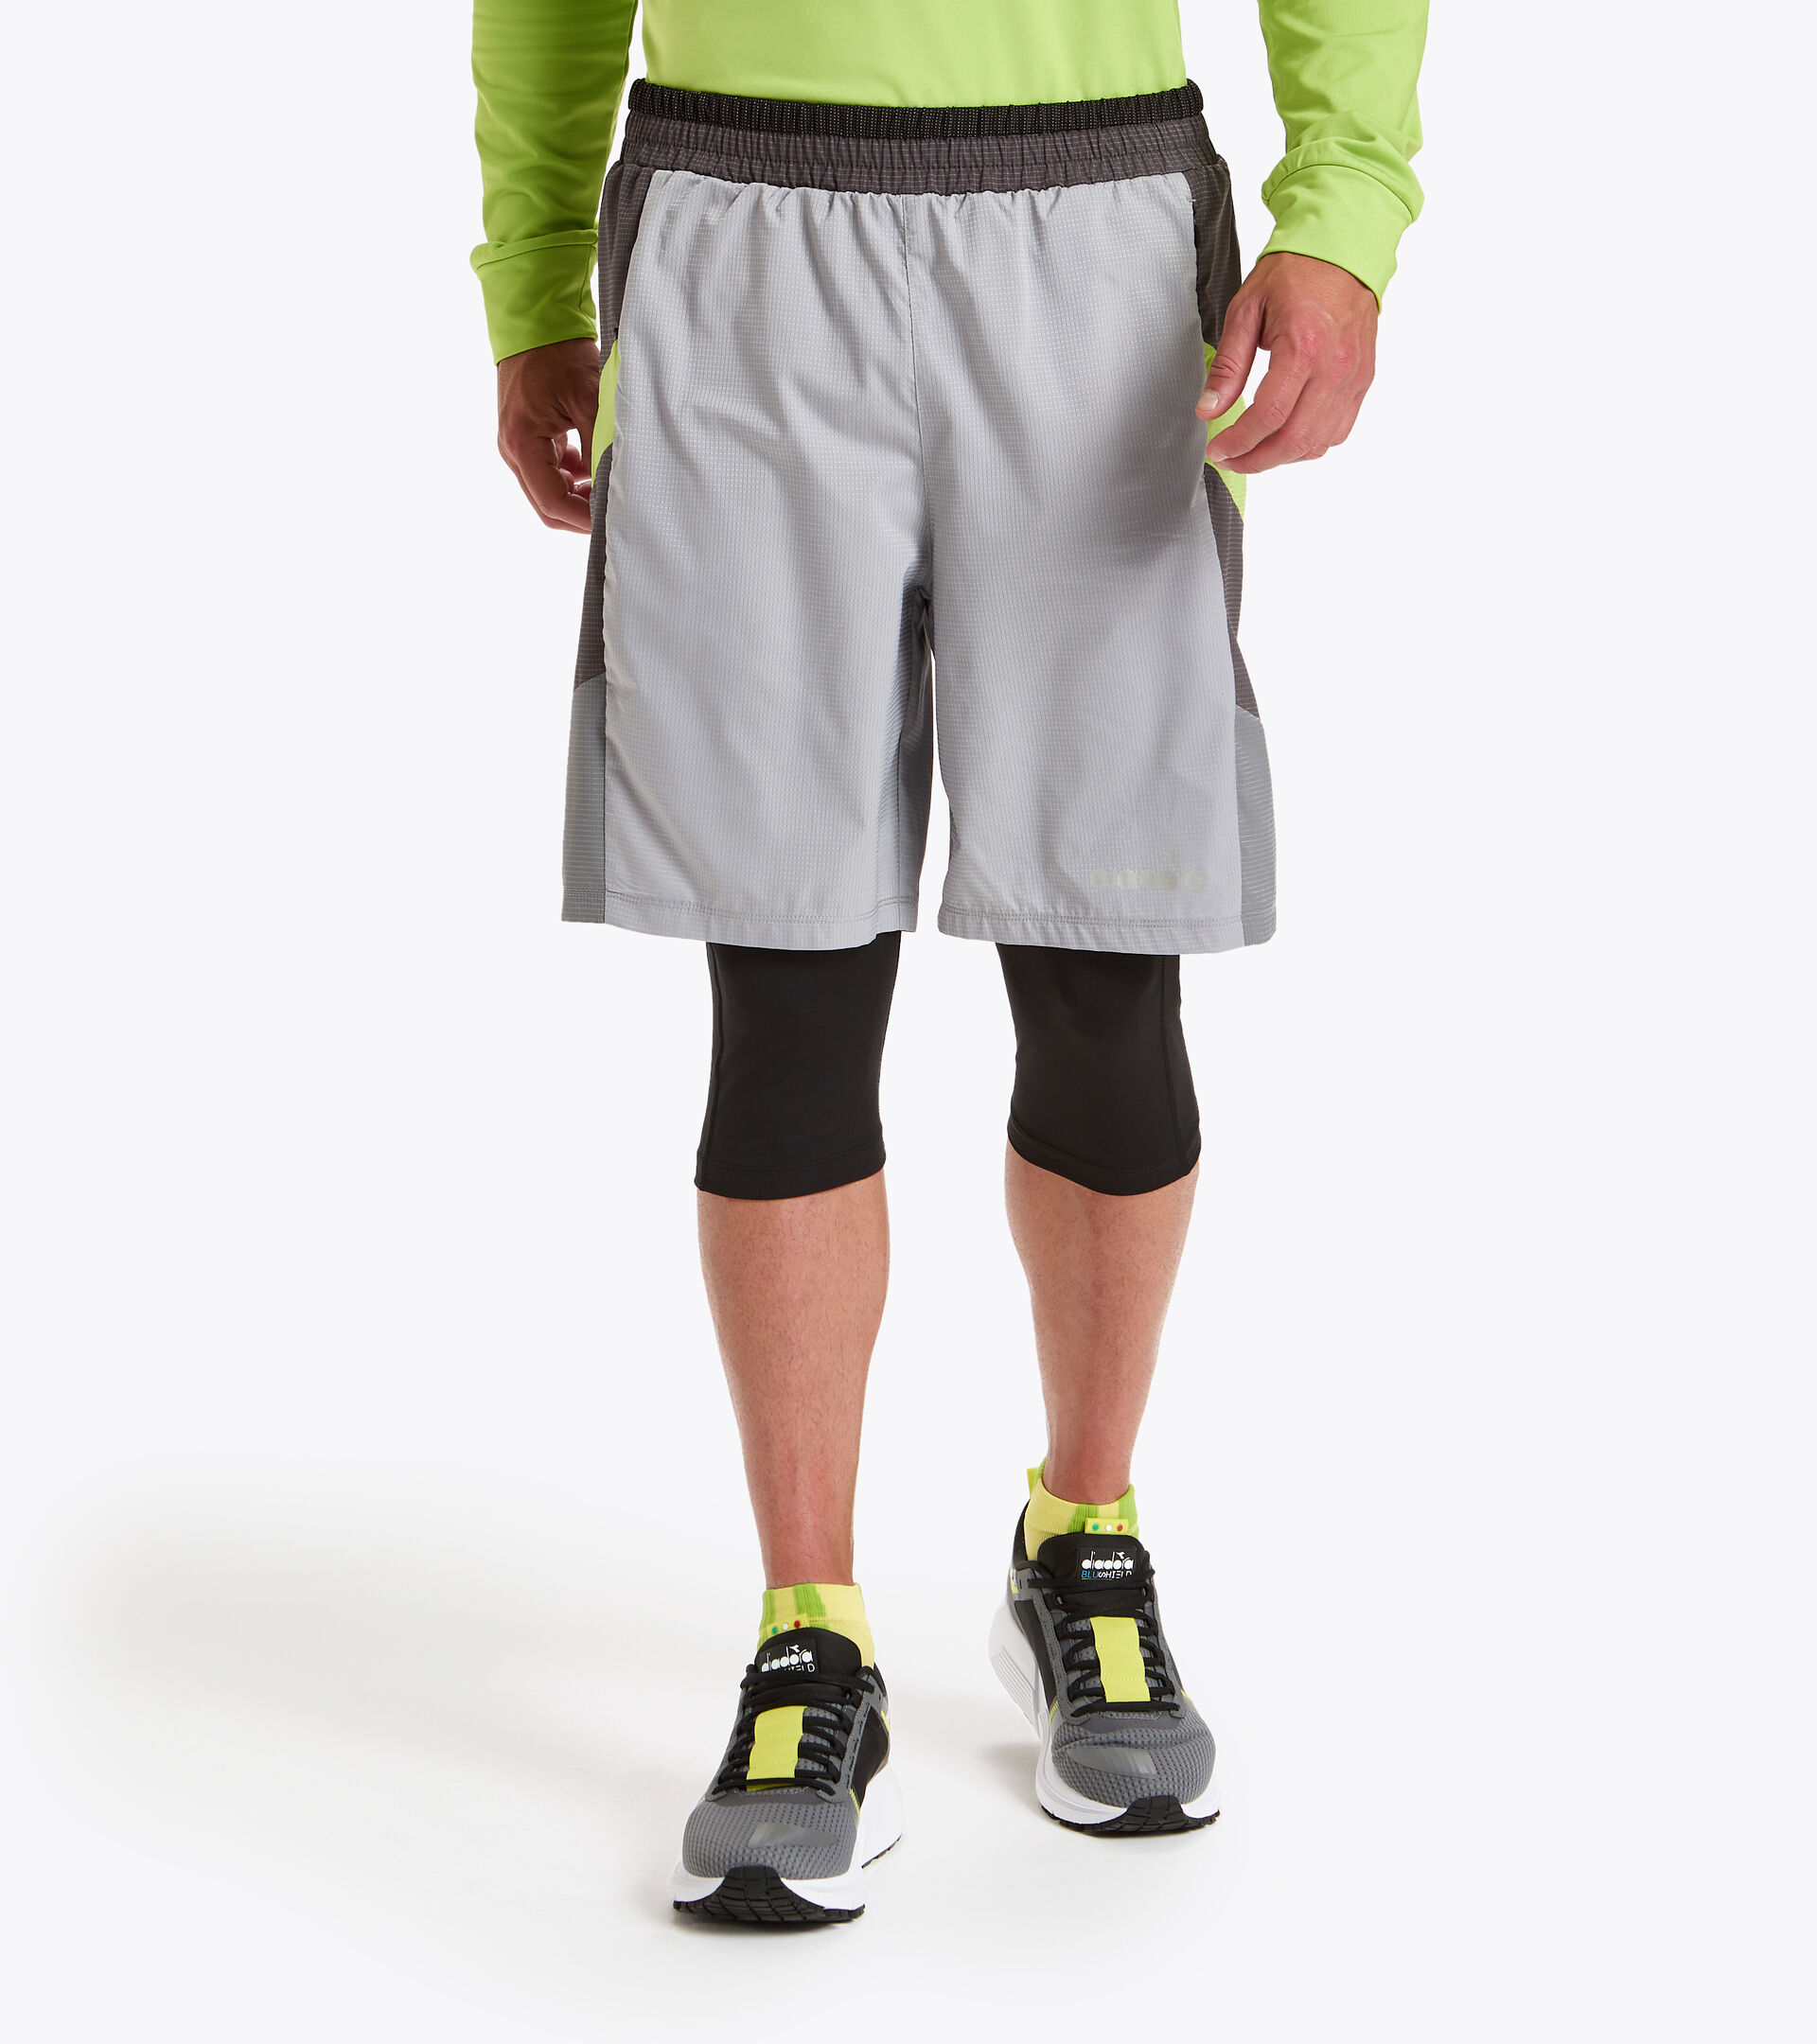 Shorts para correr - Hombrer POWER SHORTS BE ONE GRIS ALEACION - Diadora